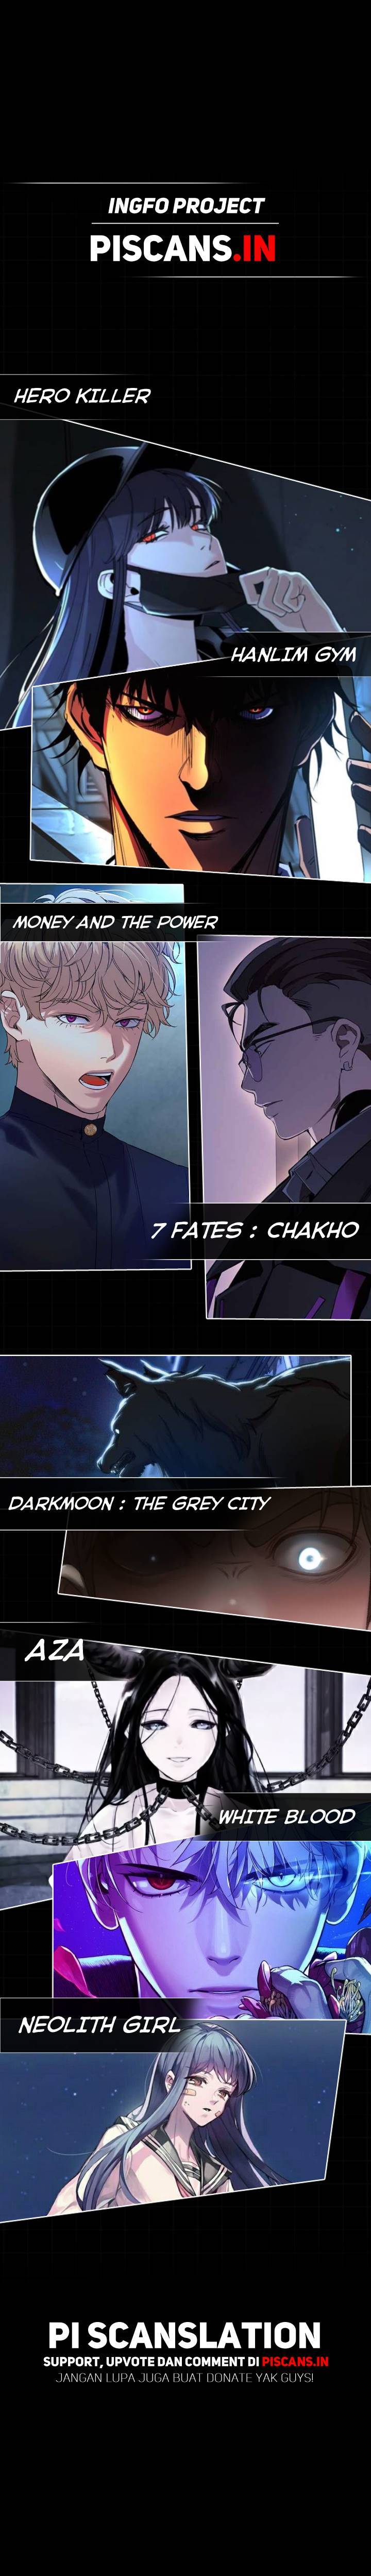 7FATES: CHAKHO Chapter 50